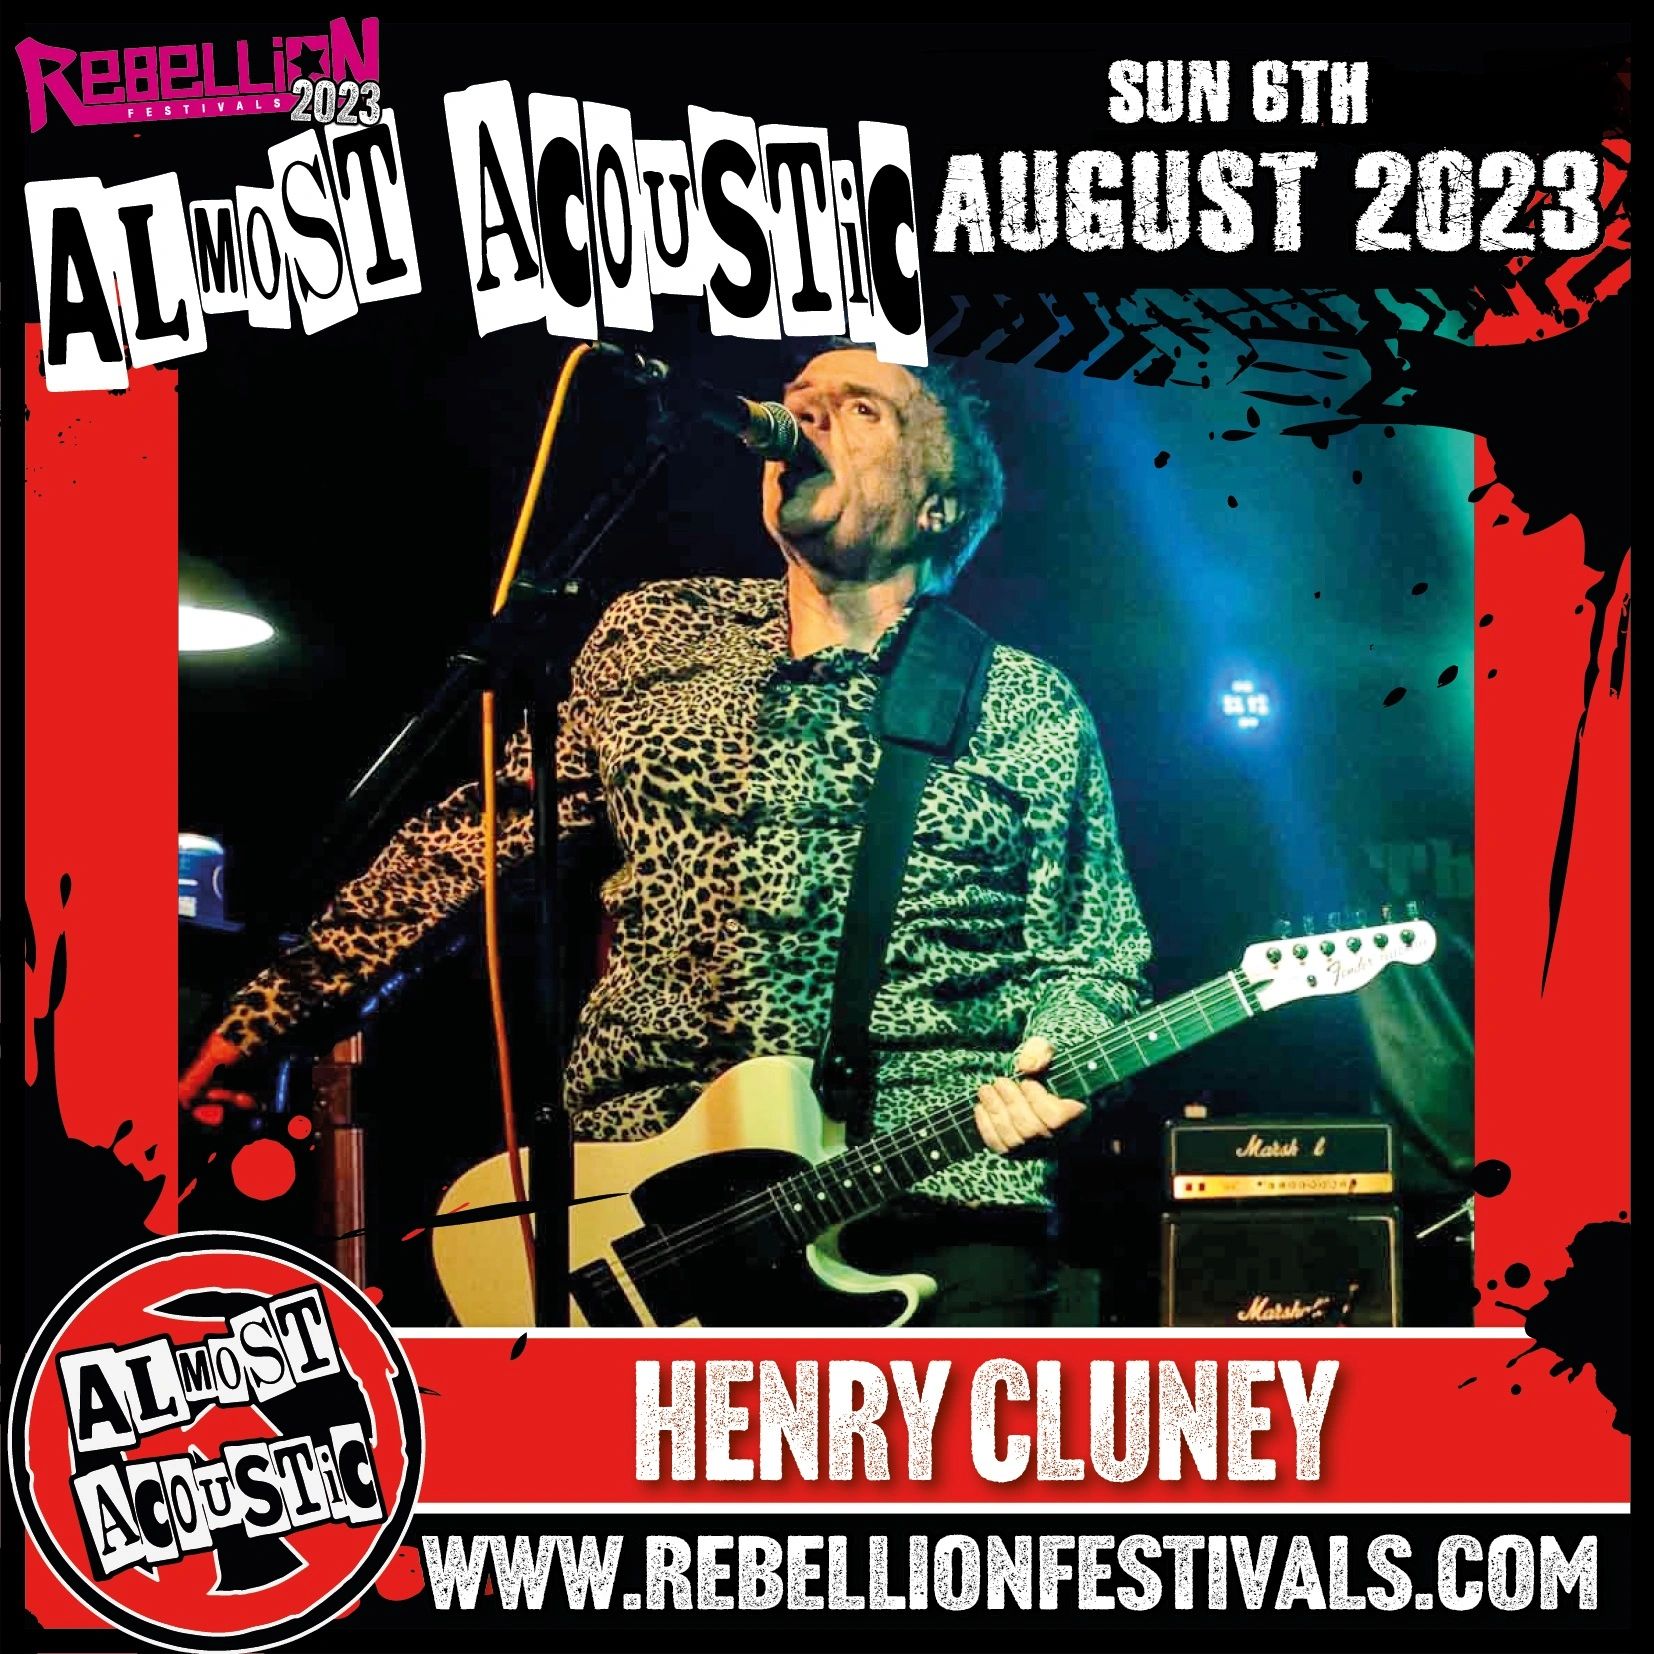 henry cluney tour